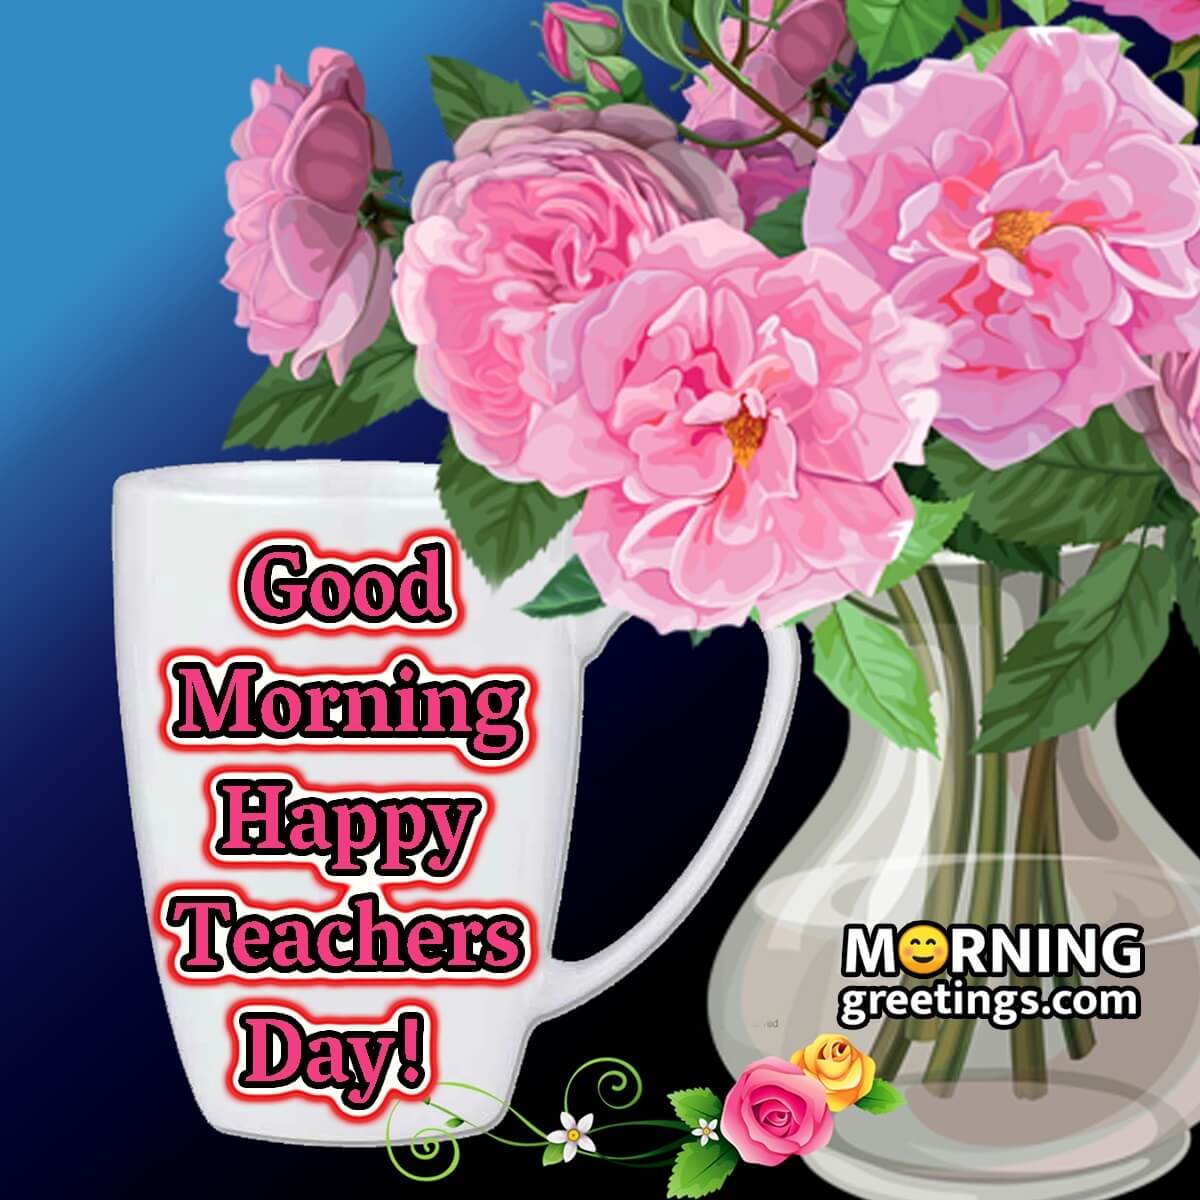 Good Morning Happy Teacher's Day